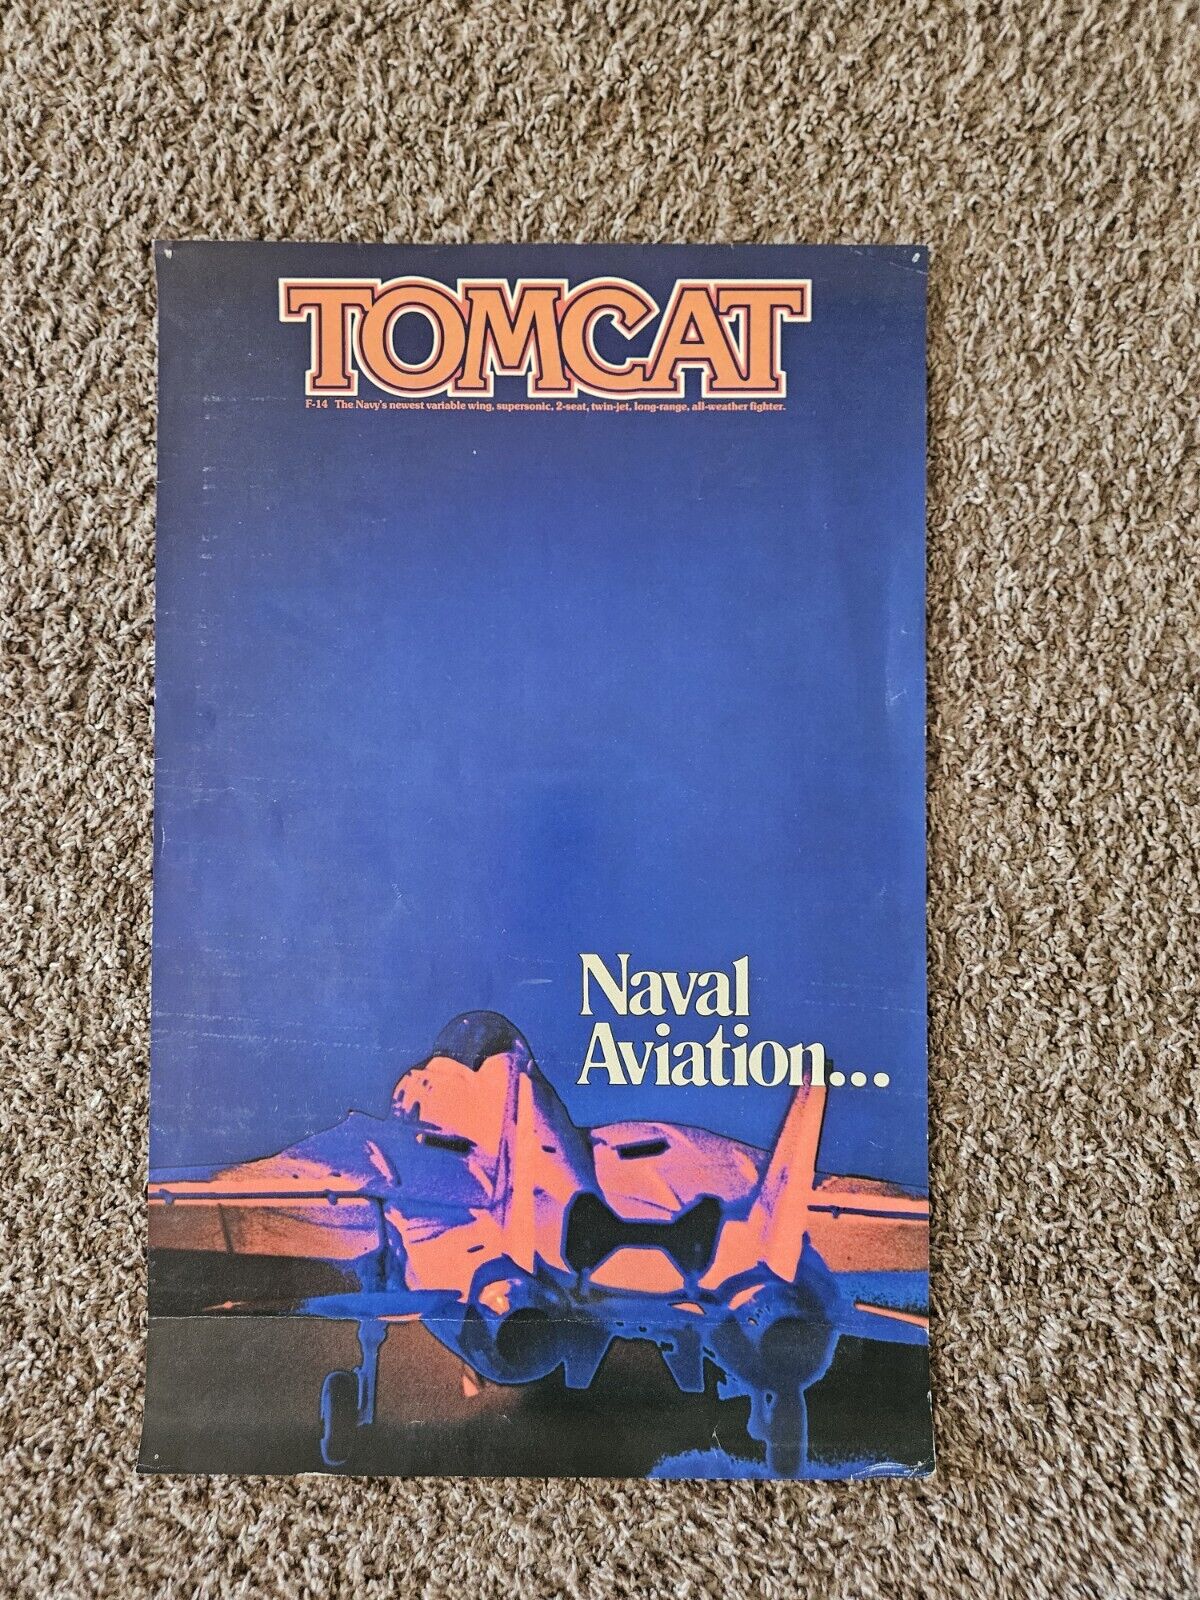 Vintage Tomcat Naval Aviation Poster